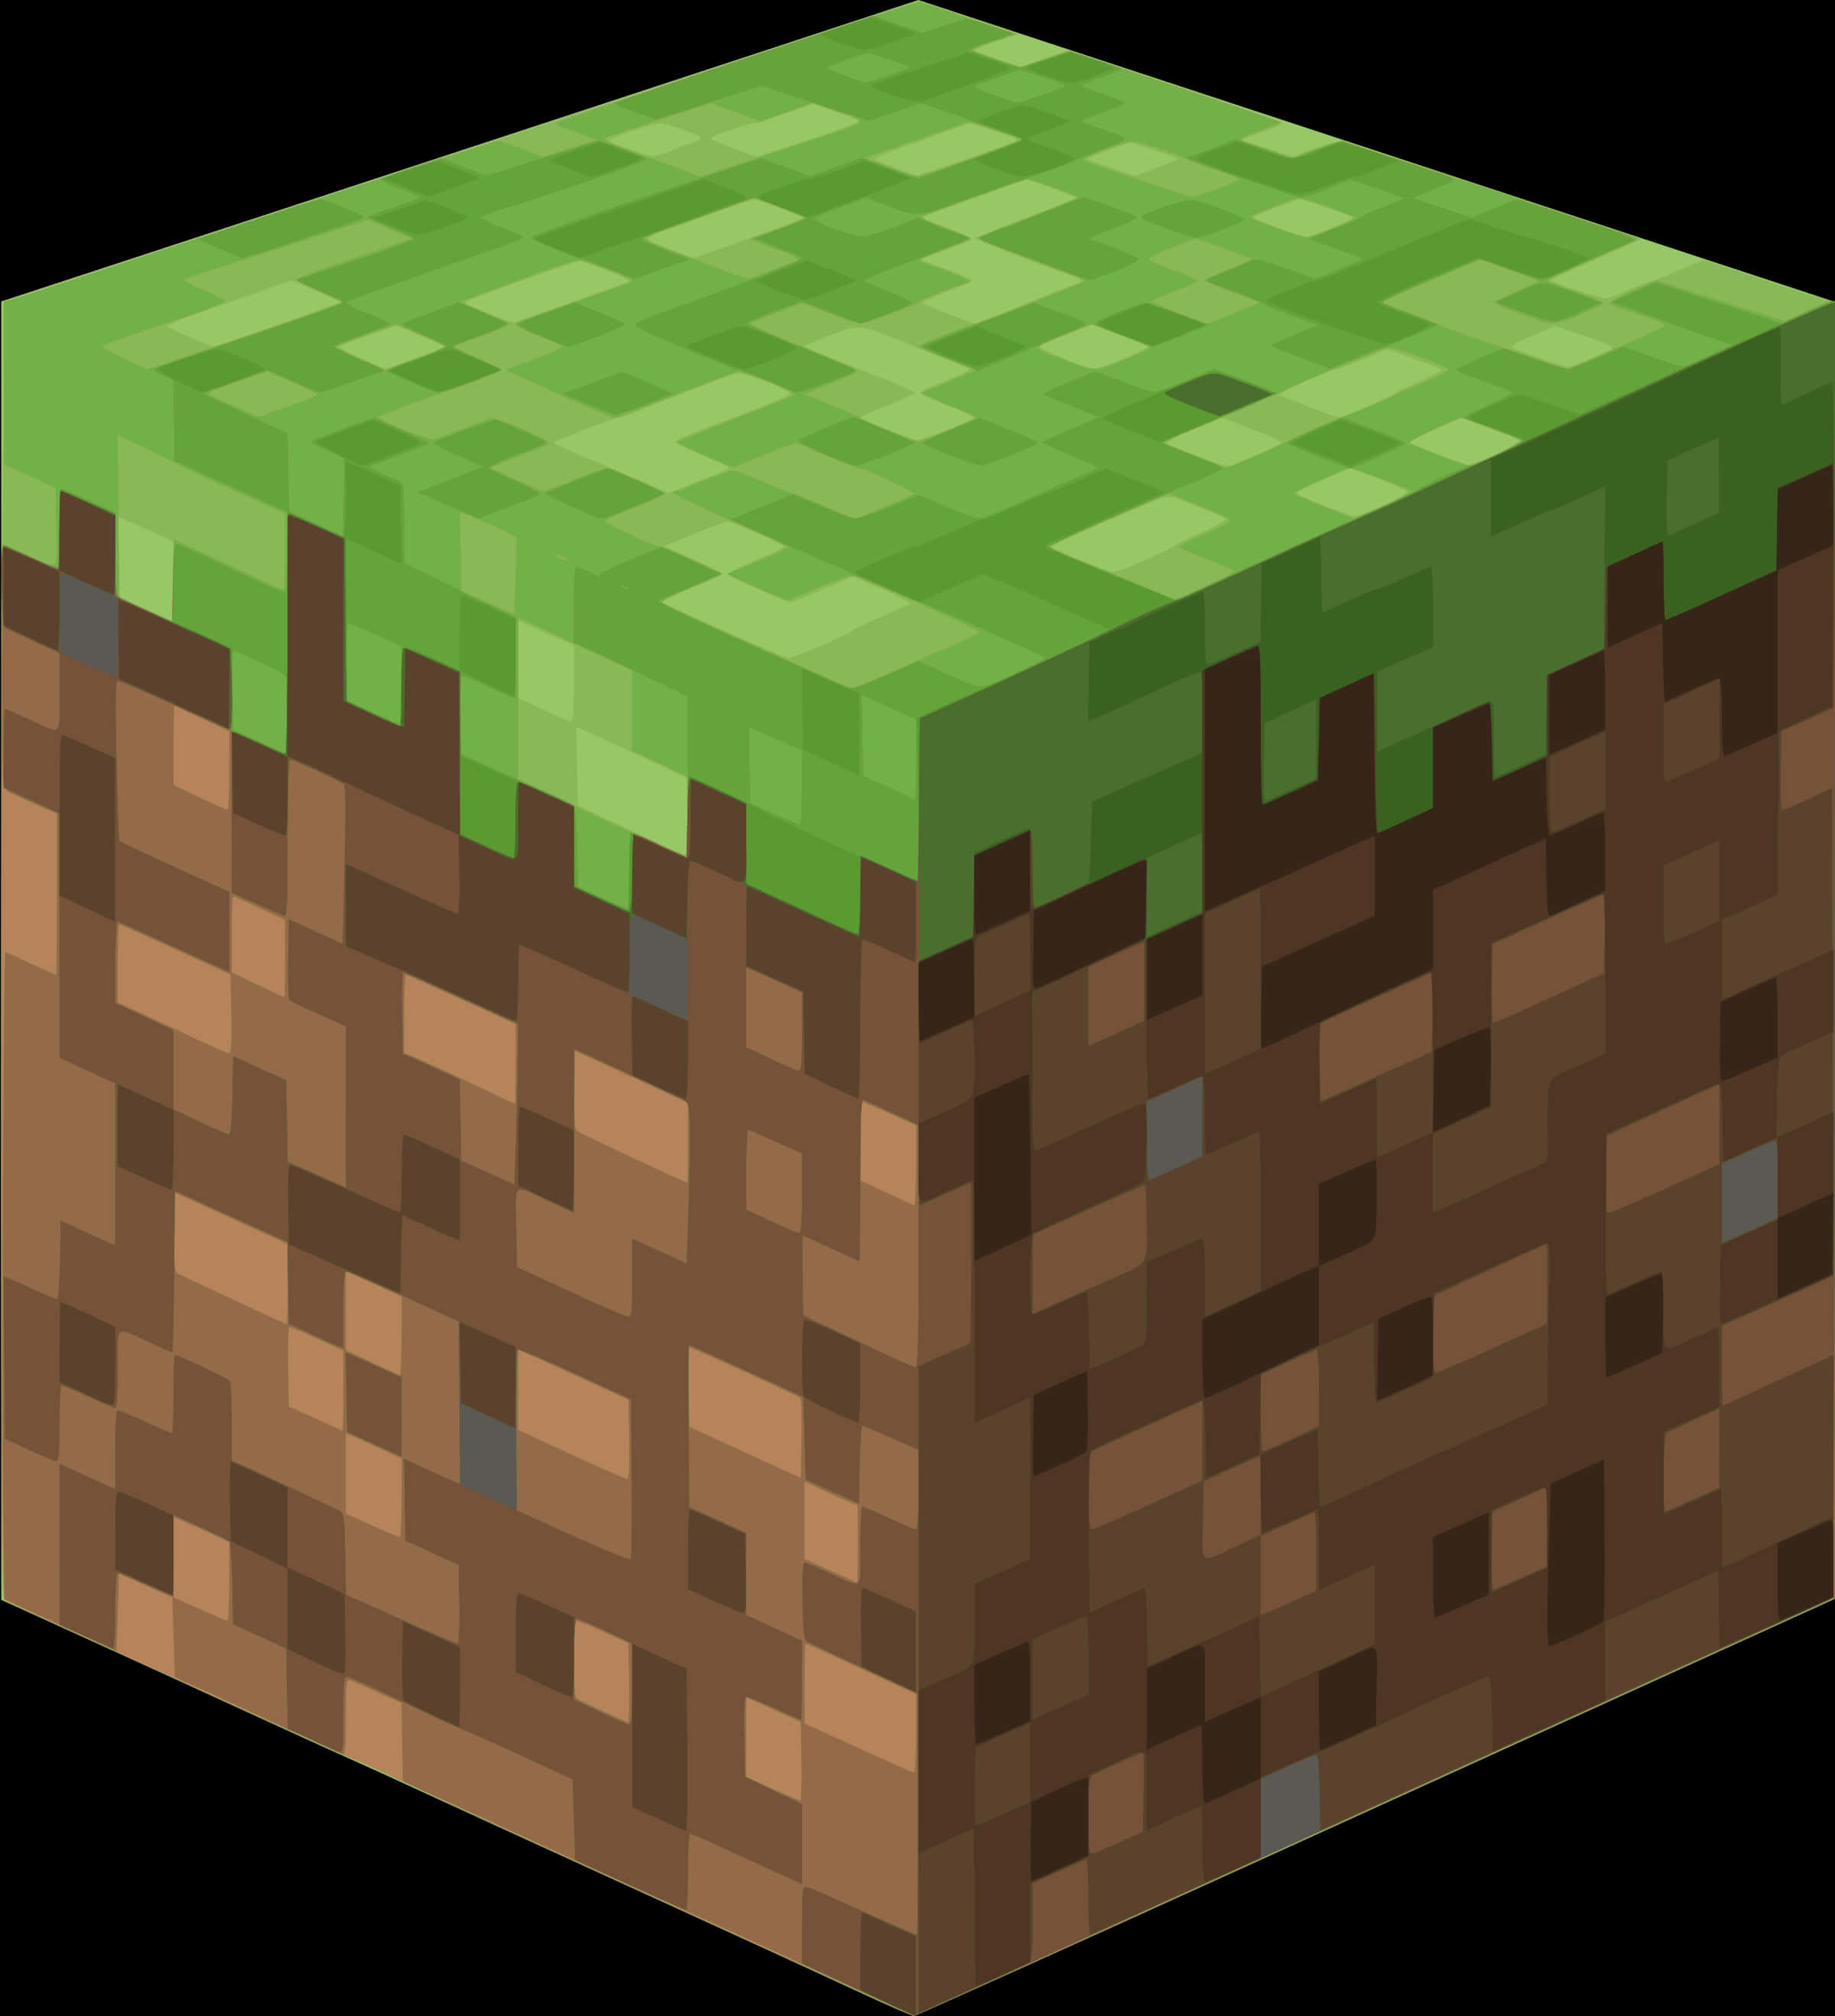 Minecraft_ Grass_ Block PNG image